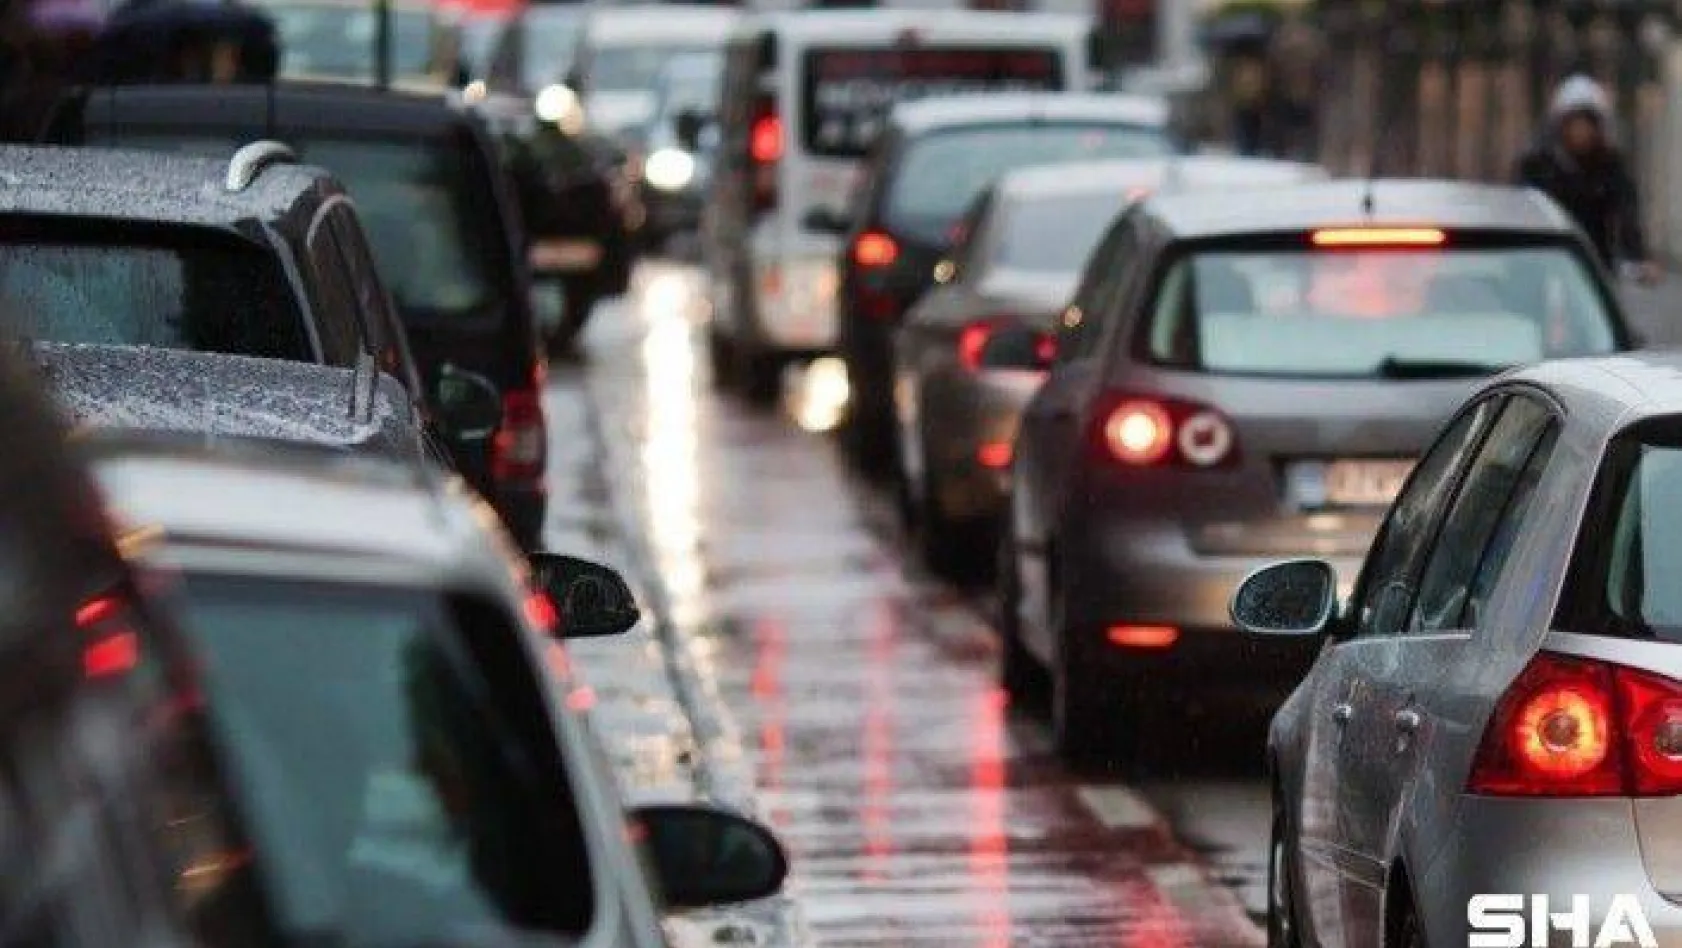 Yoğun trafikte İstanbul dünyada 5, Avrupa'da 2'nci sırada